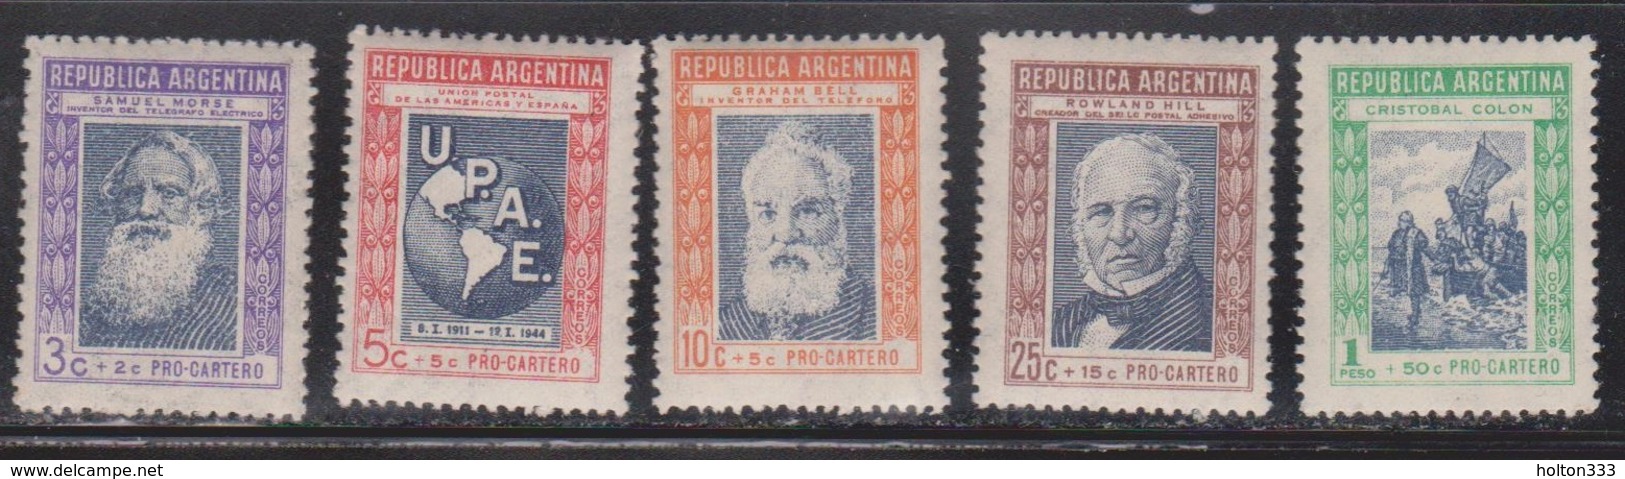 ARGENTINA Scott # B1-5 MNH - Semipostals - Unused Stamps